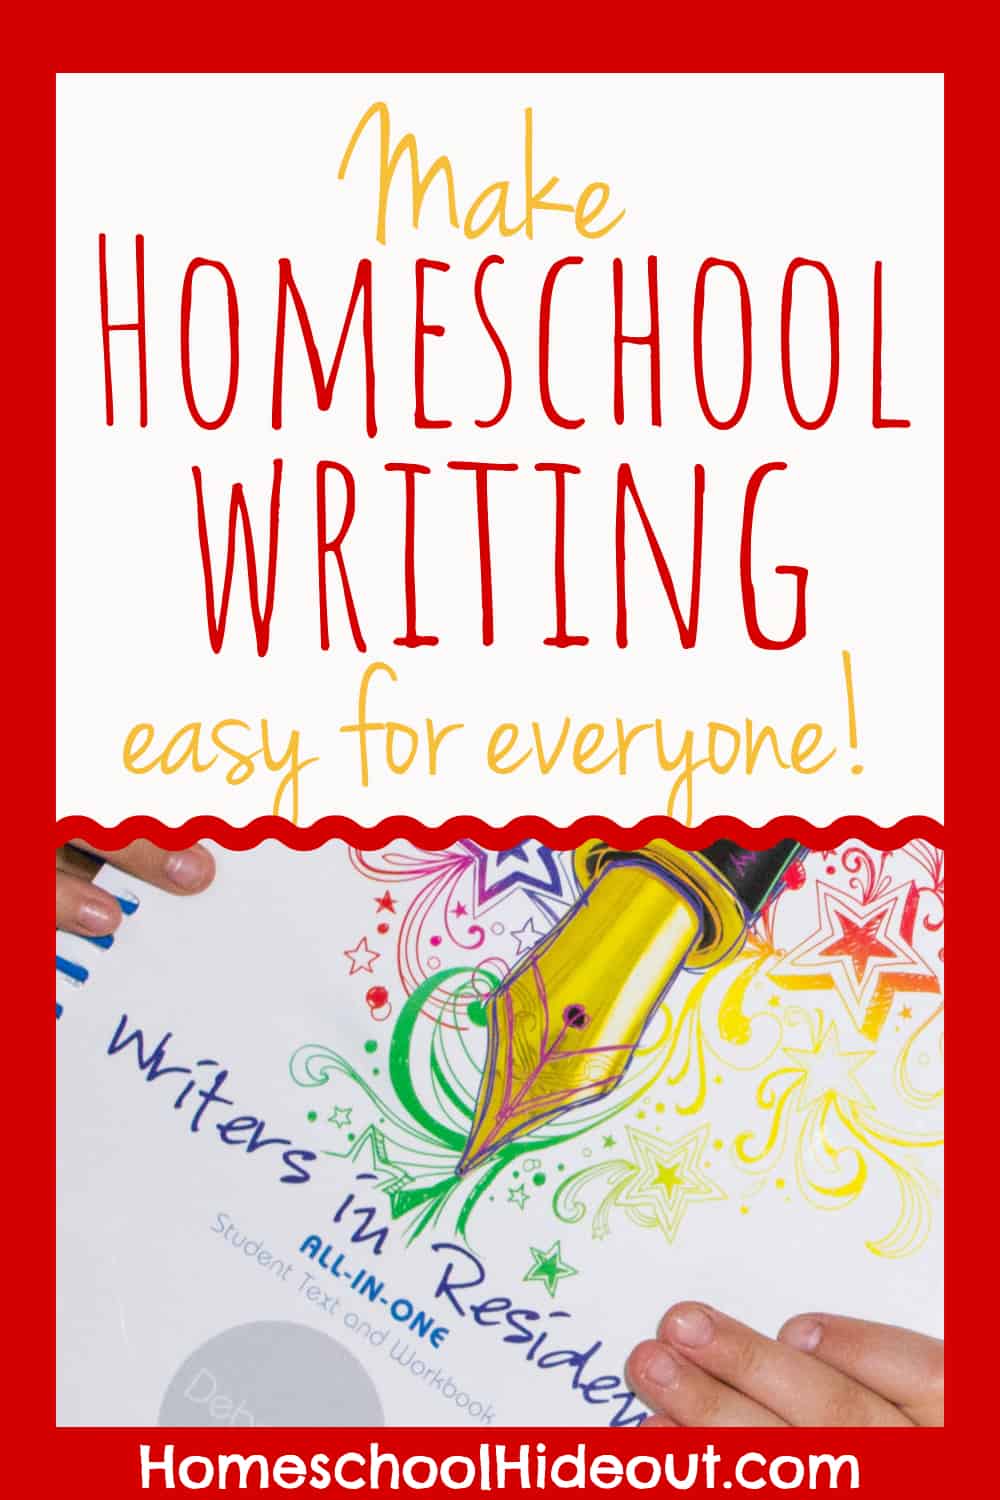 homeschool essay writing